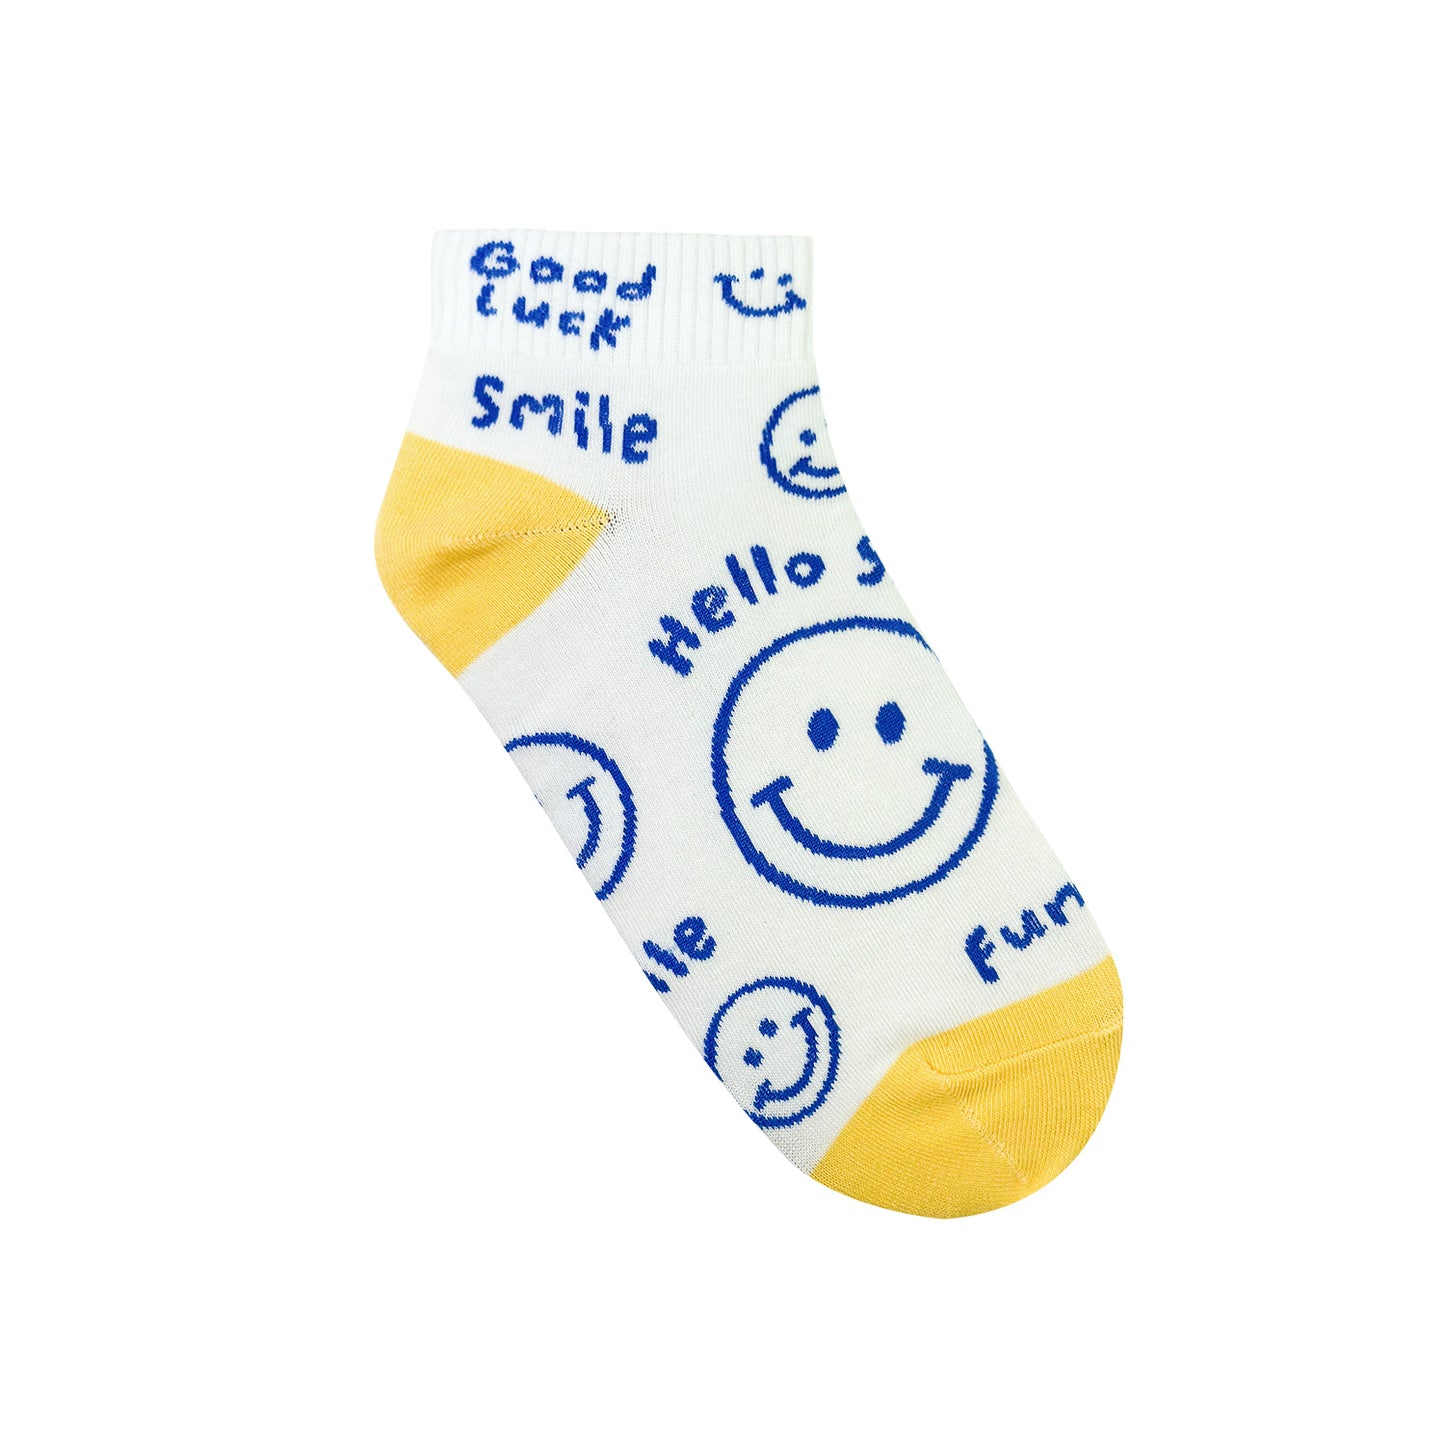 Women's Crew Smile Graffiti Socks